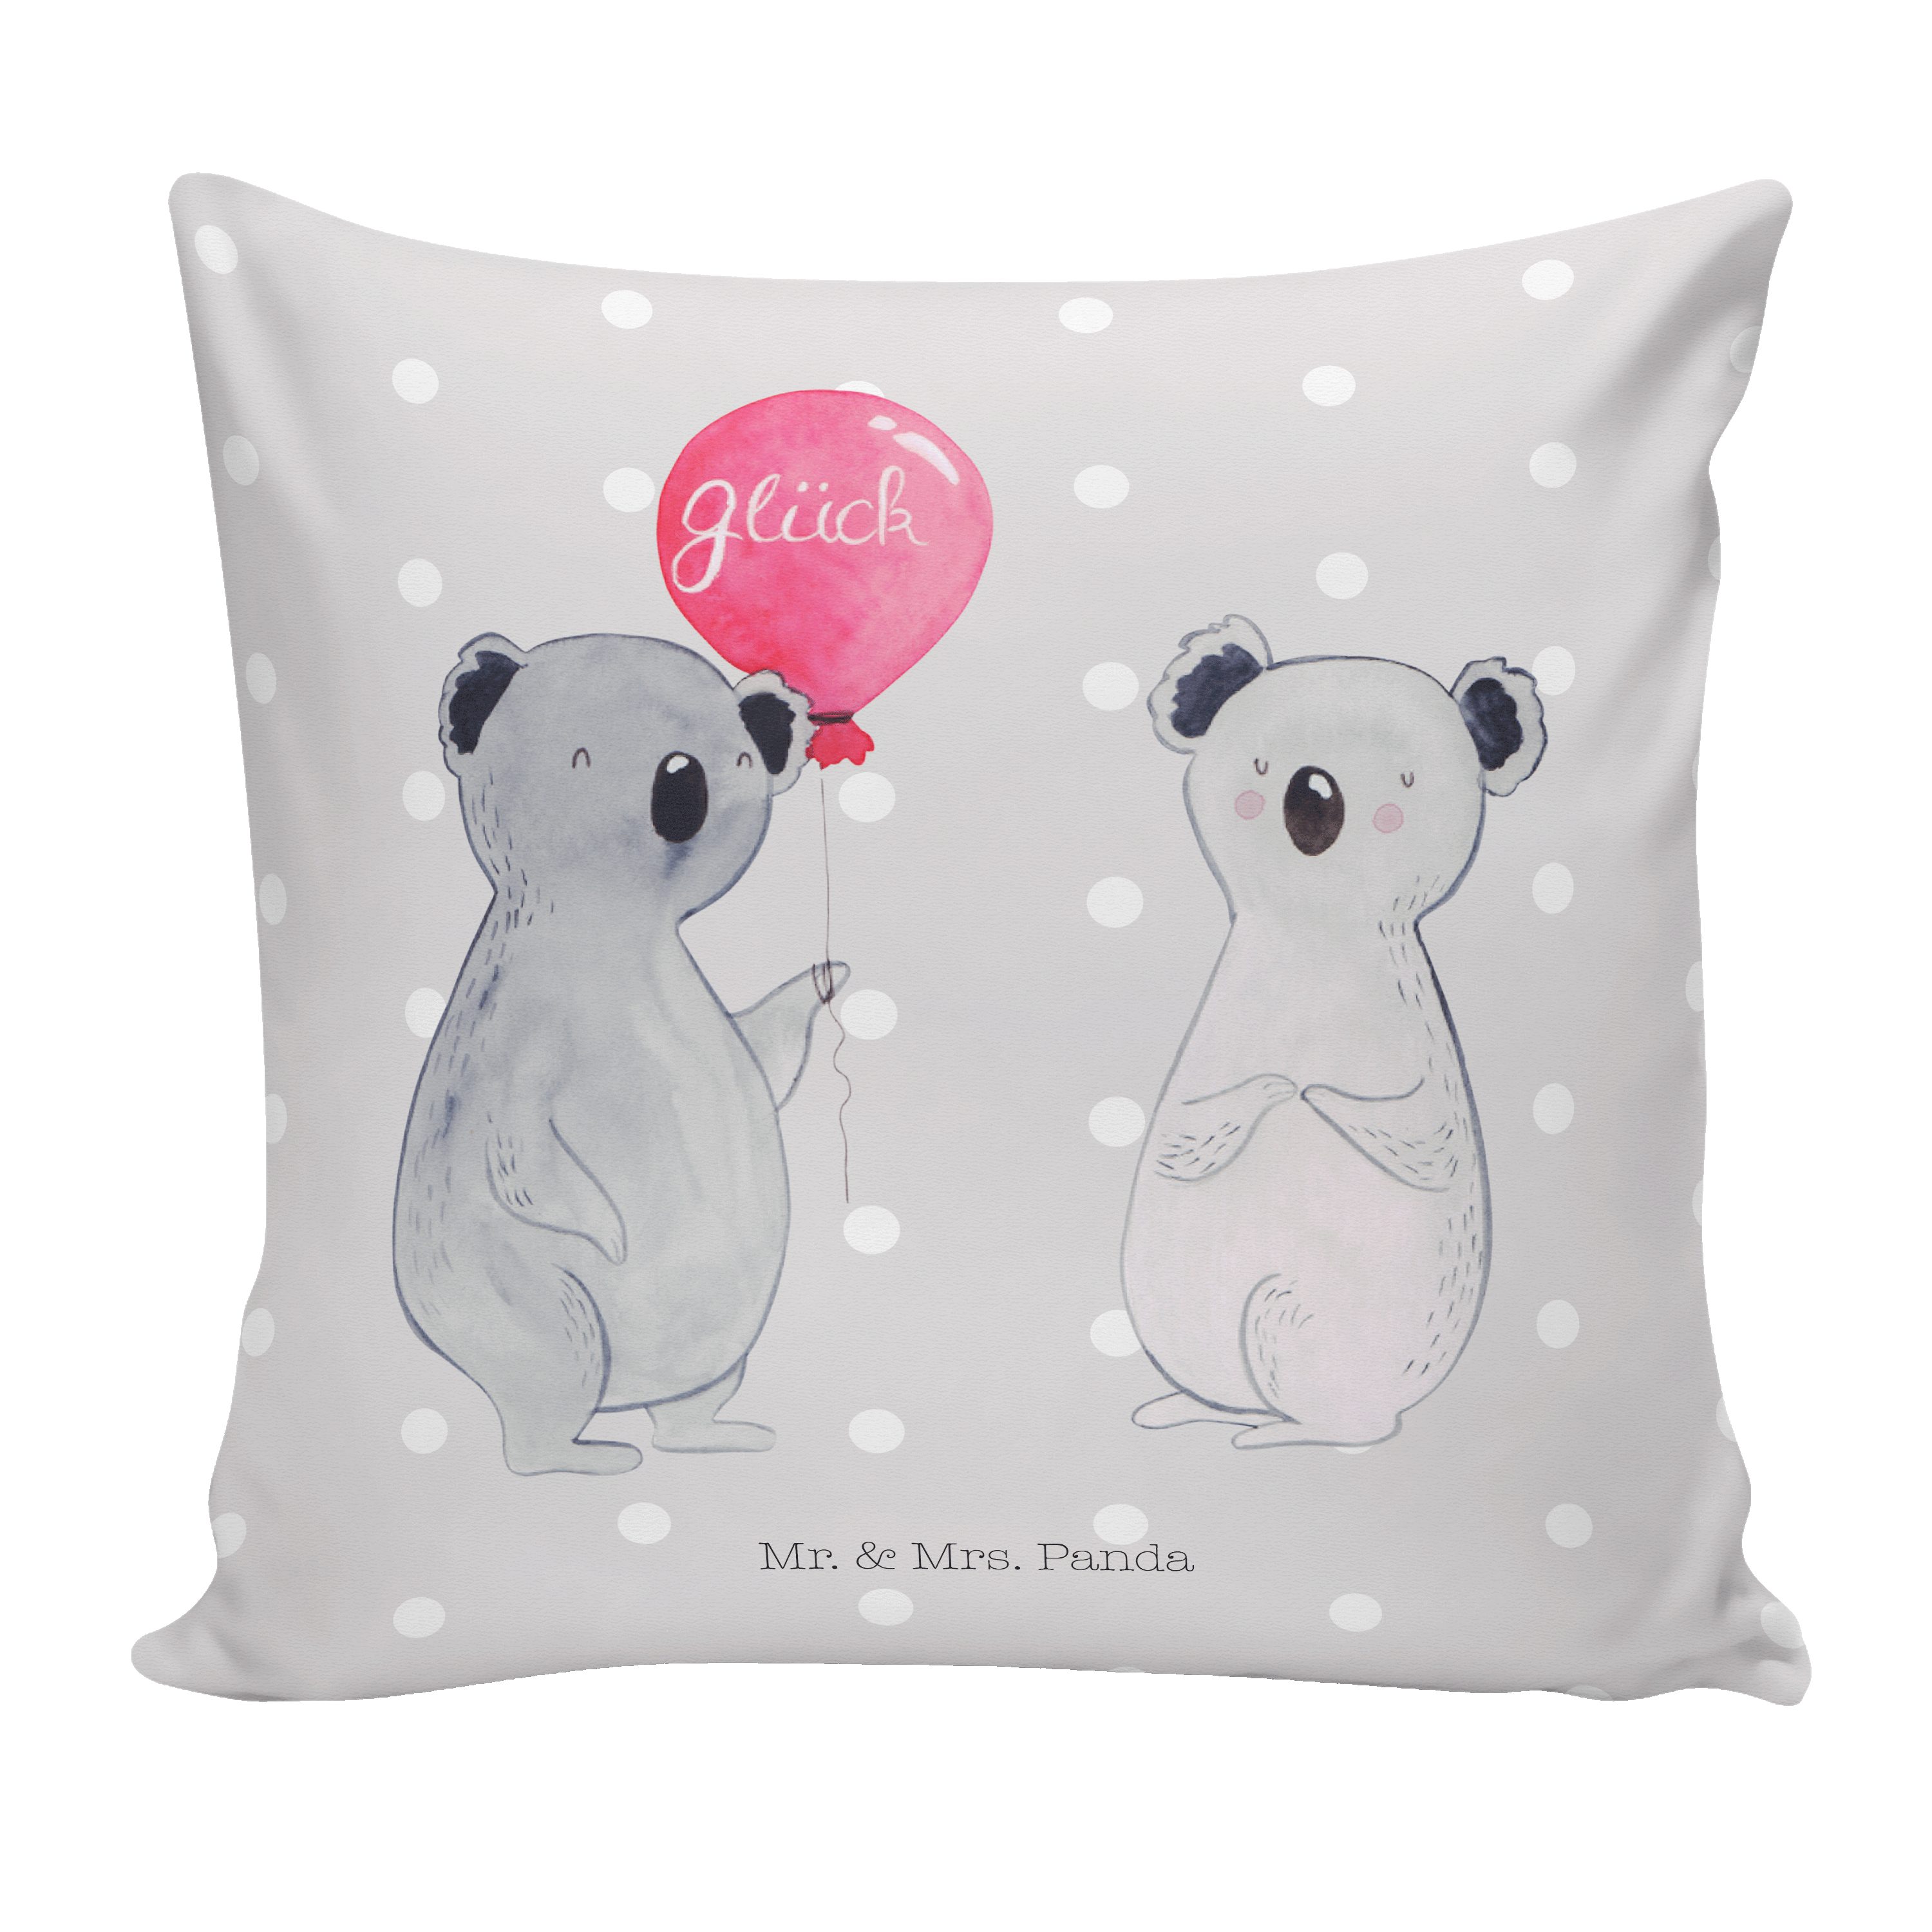 Mr. & Mrs. Panda Dekokissen Koala Luftballon - Grau Pastell - Geschenk, Geburtstag, Dekokissen, P